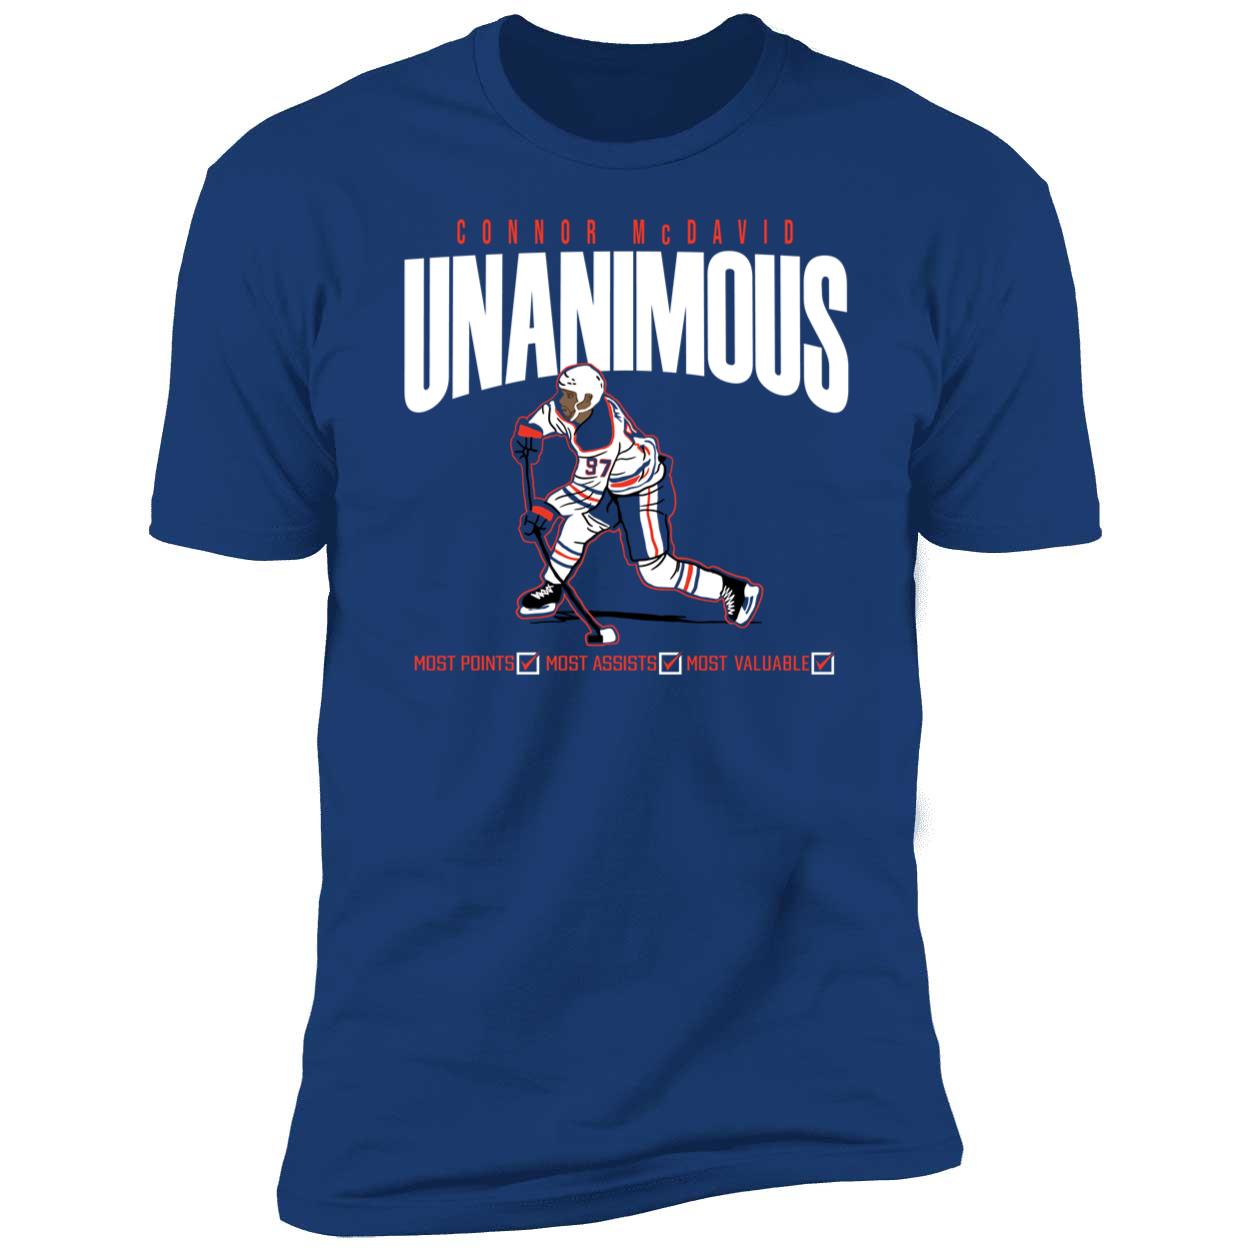 Connor Mcdavid Unanimous Premium SS T-Shirt